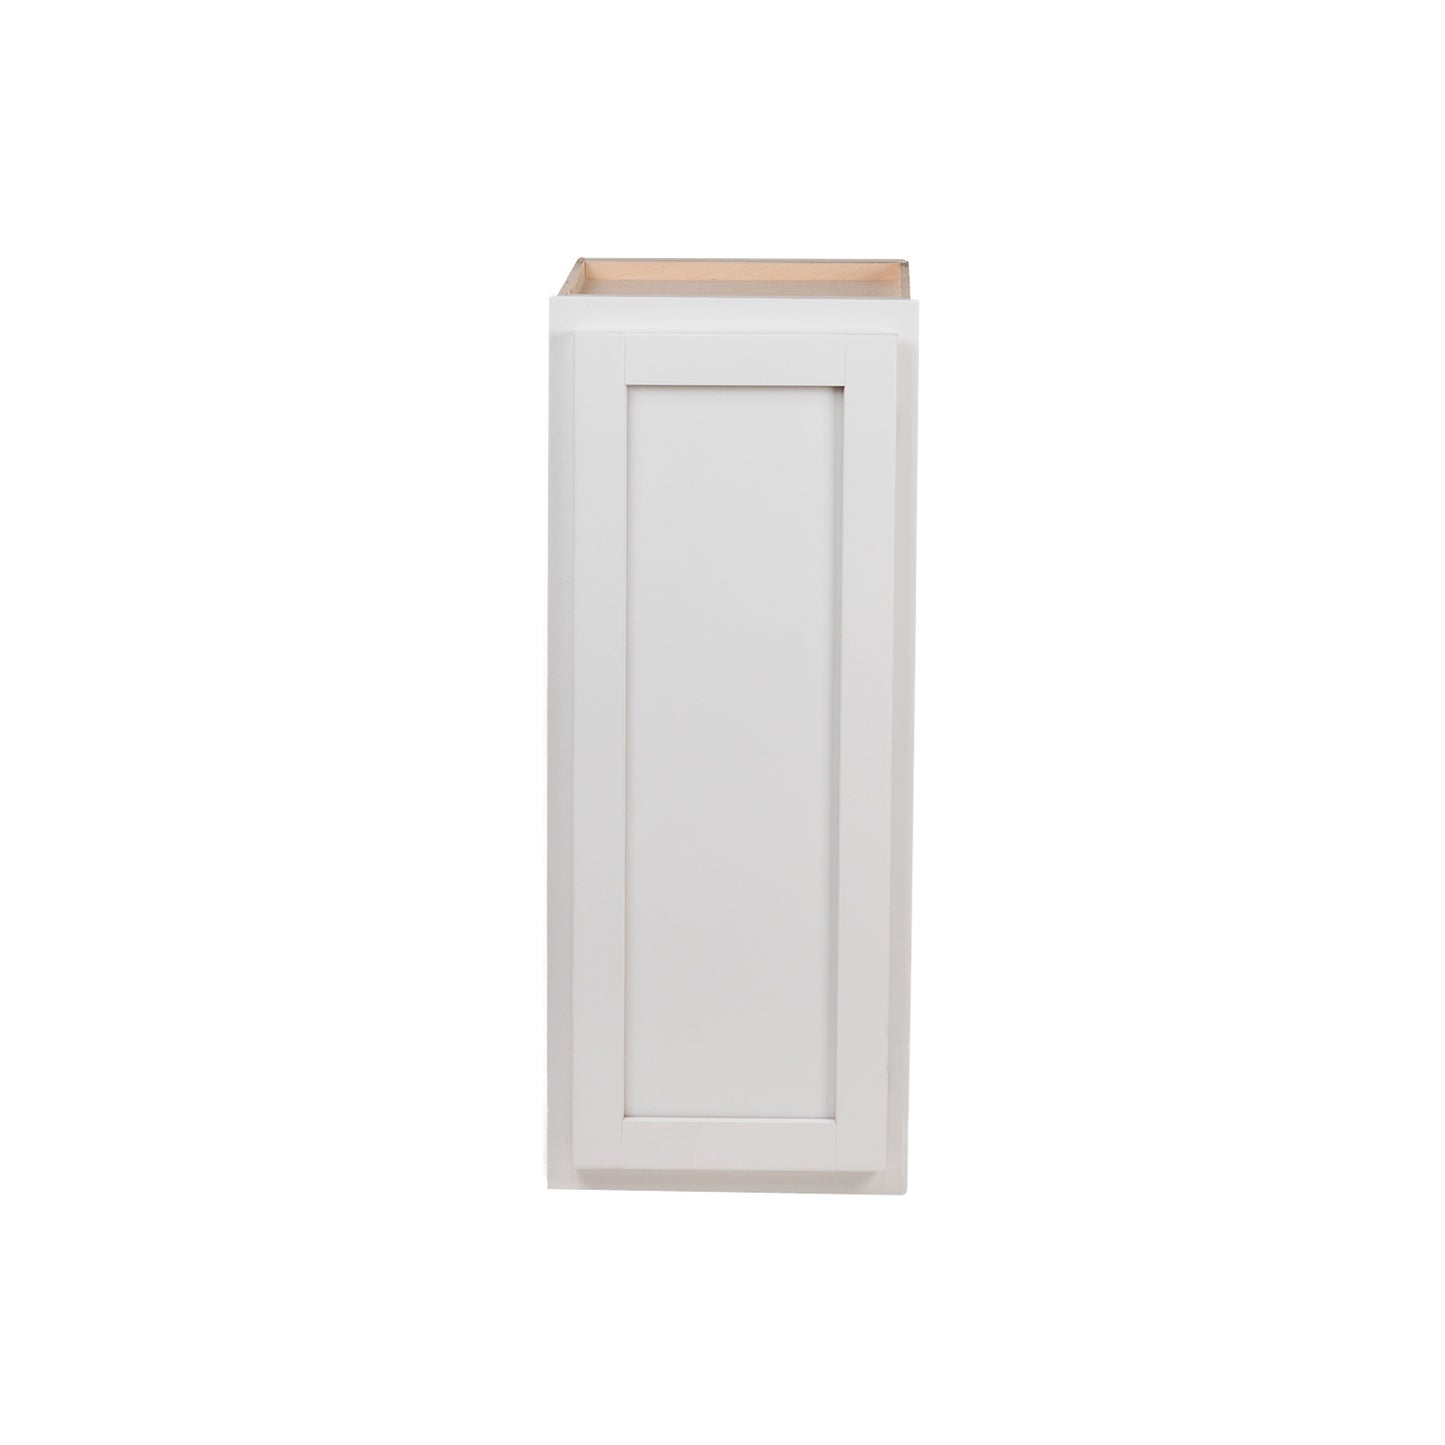 Quicklock RTA (Ready-to-Assemble) Pure White 21"Wx30"Hx12"D Wall Cabinet